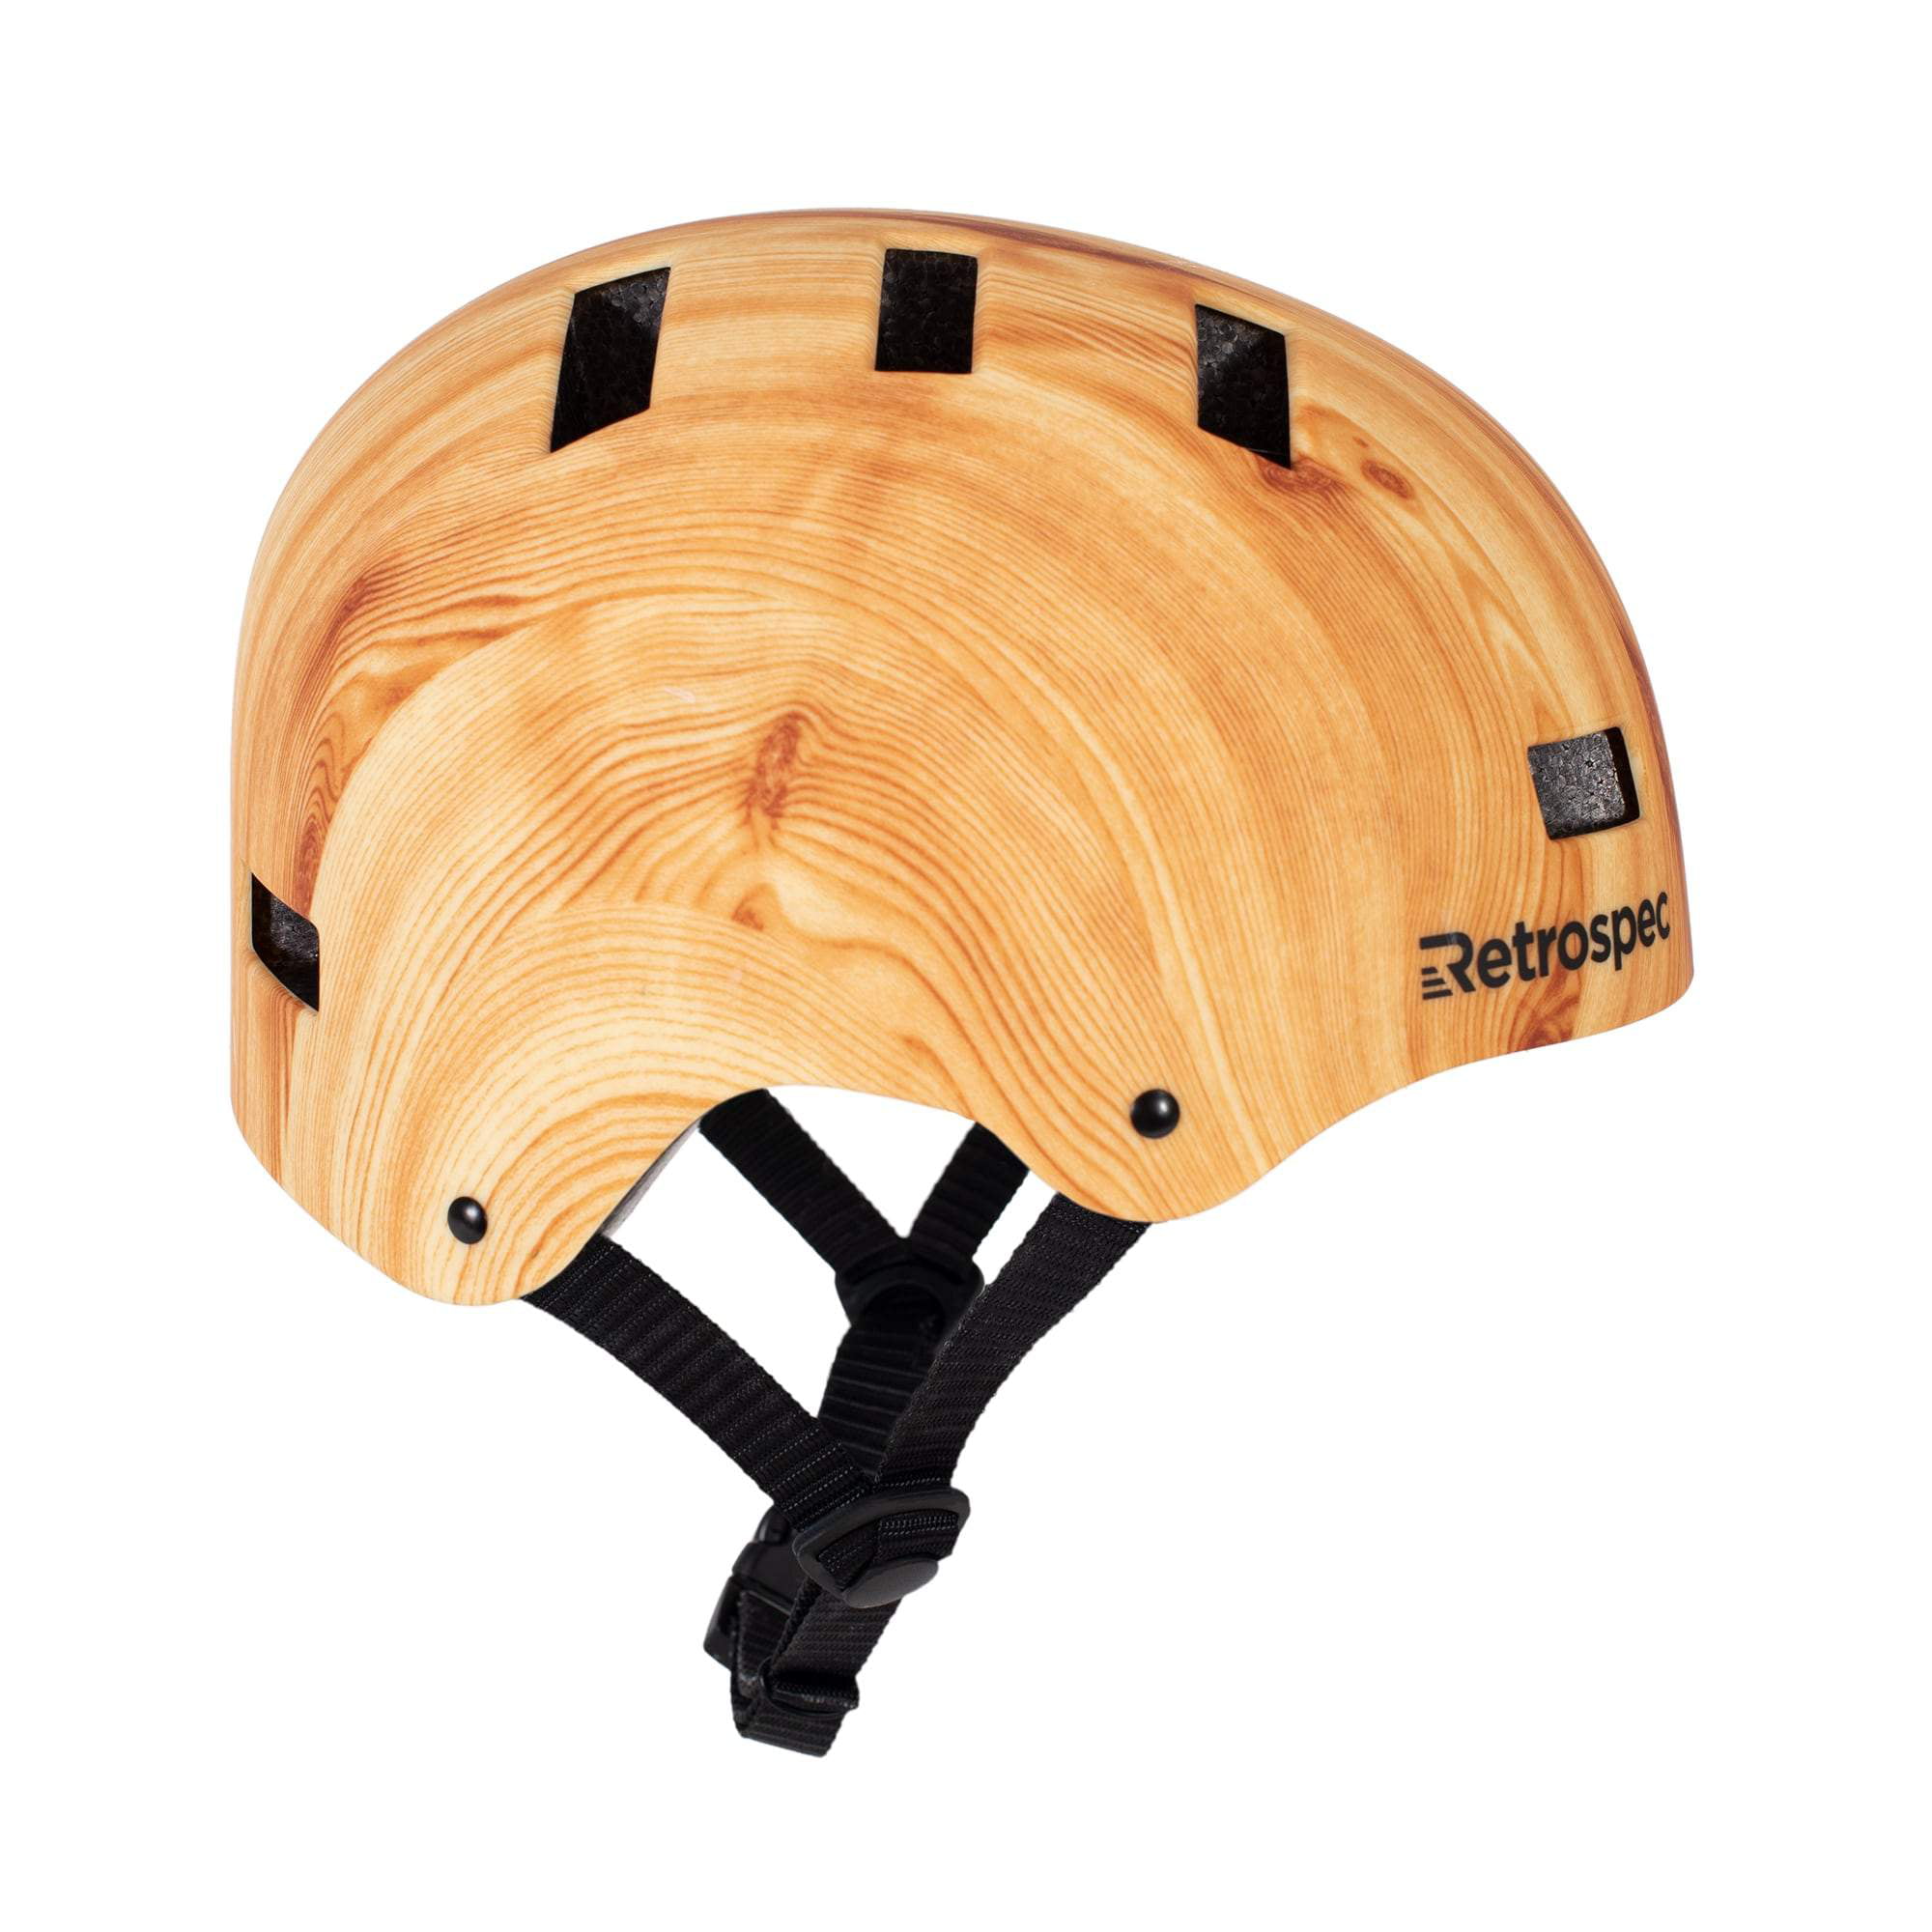 Retrospec Cm-1 Classic Commuter Bike Skate Ski Scooter Helmet Size L A1 for sale online